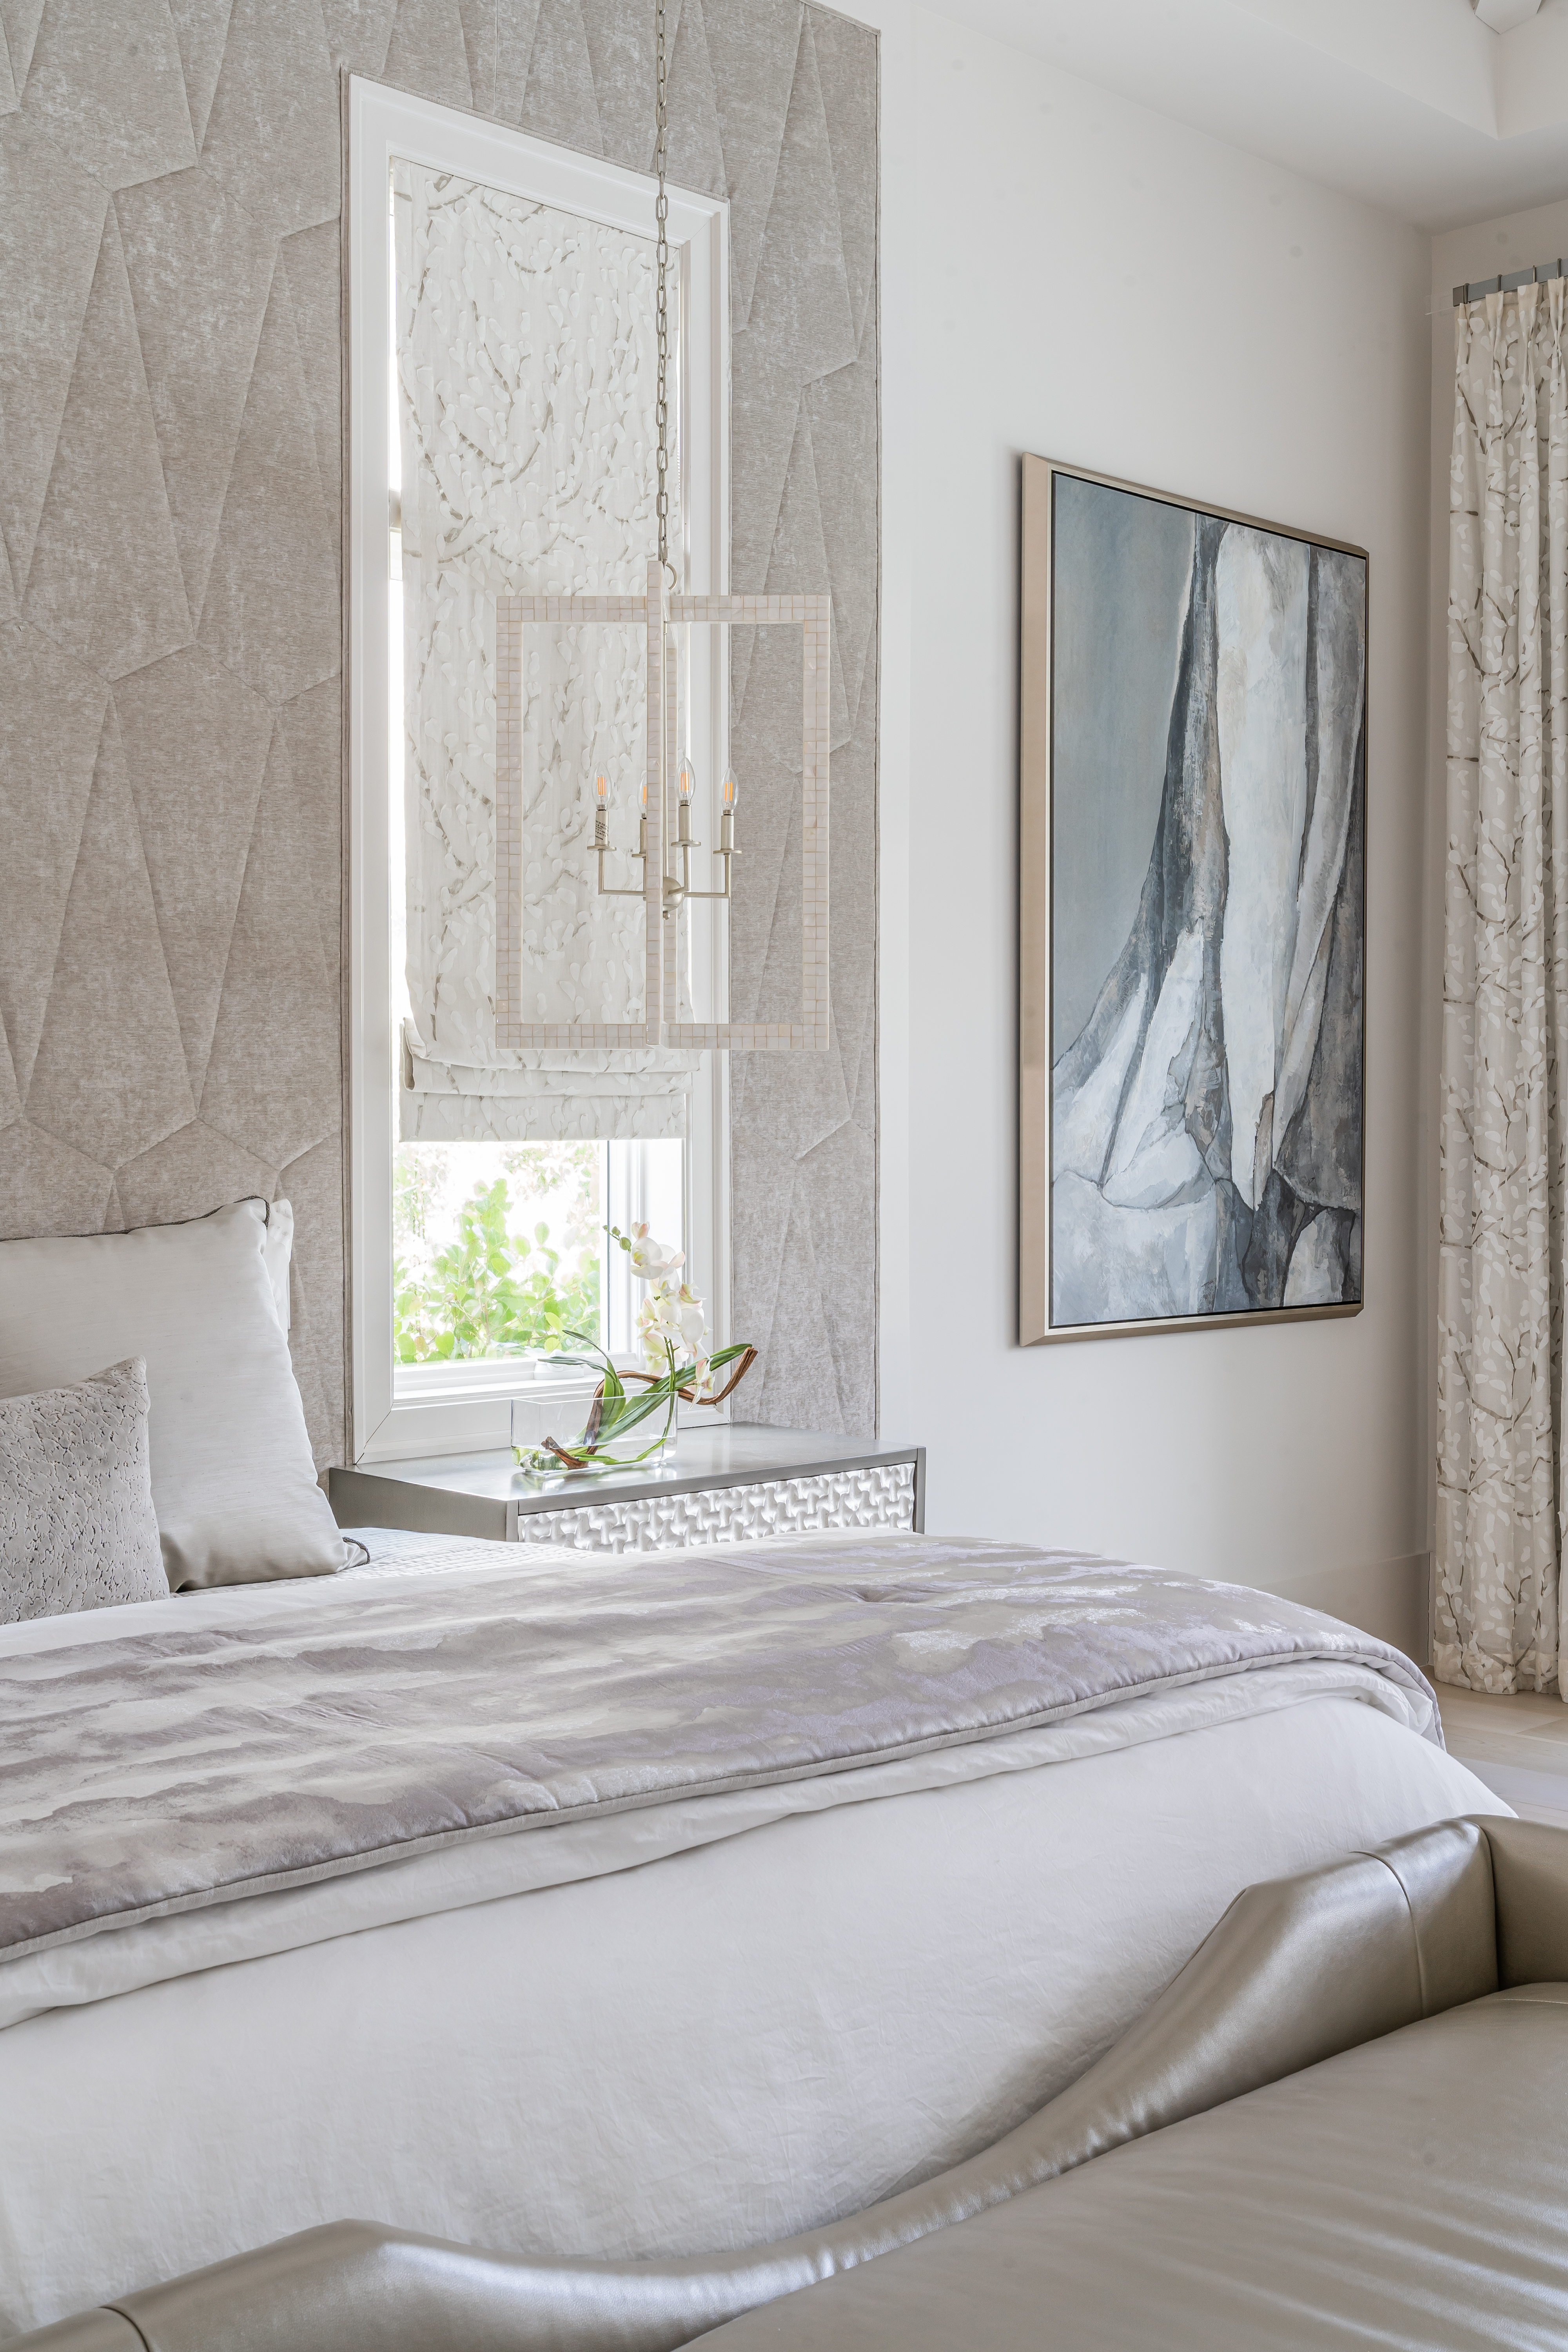 A coastal contemporary primary bedroom design with a neutral palette, designed by Florida interior designer Brooke Meyer of Gulfshore Interior Design